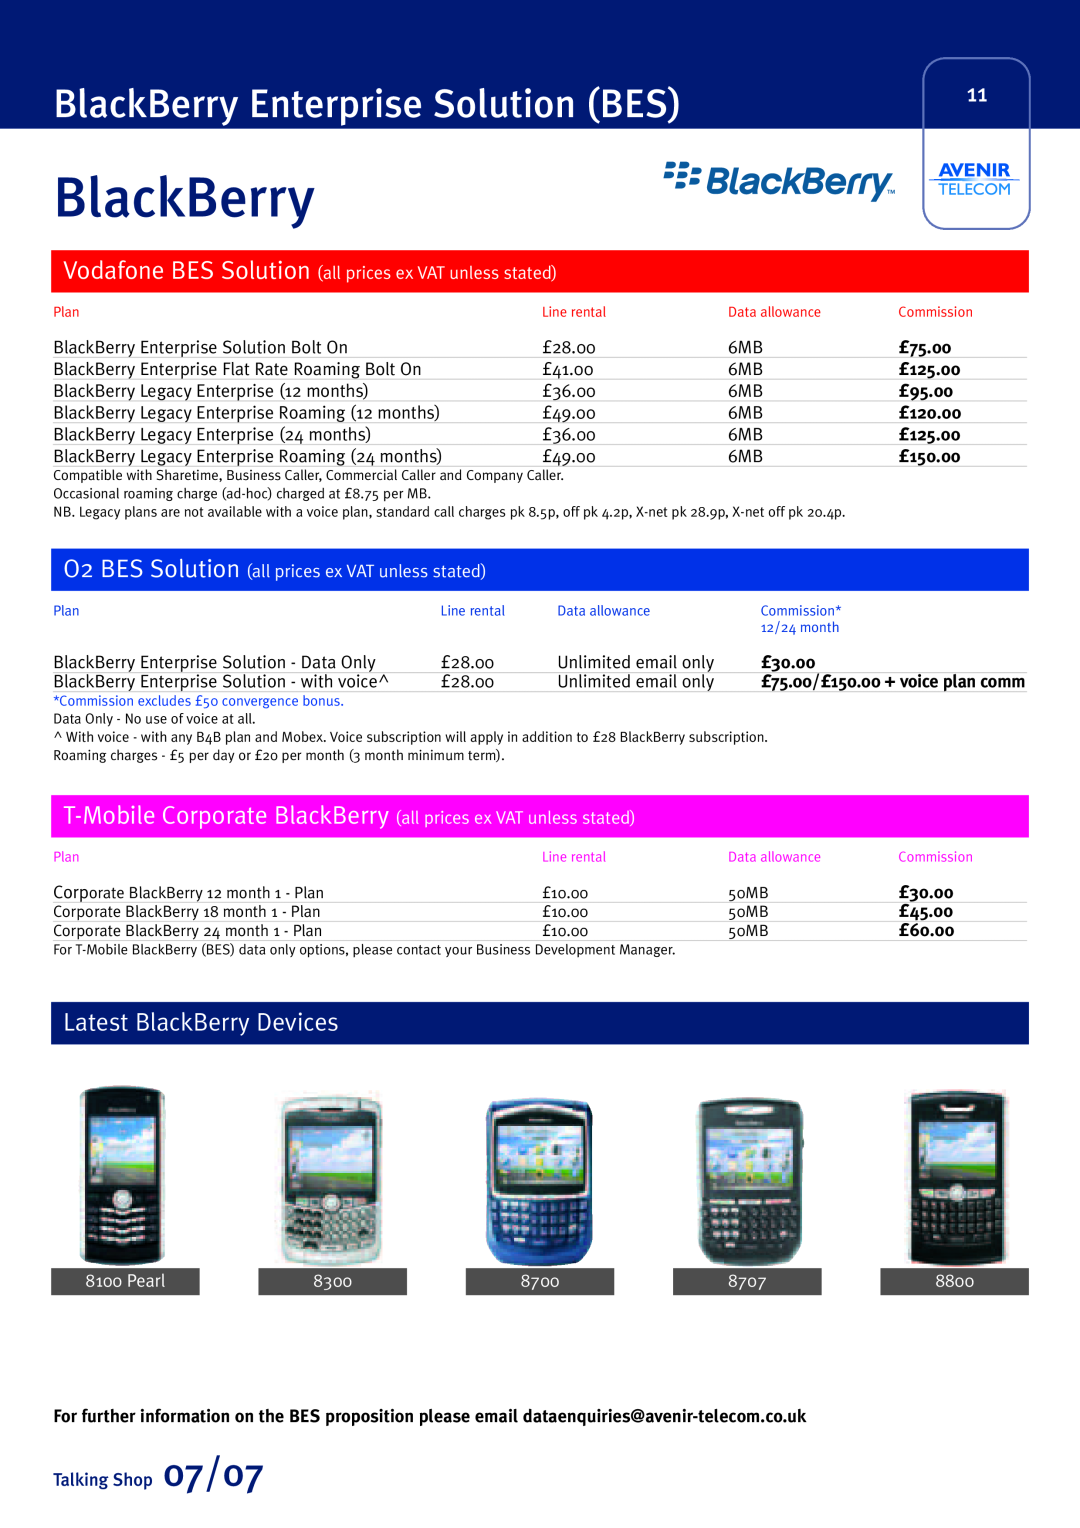 Sony Ericsson W580i BlackBerry Enterprise Solution BES, Latest BlackBerry Devices, £75.00, £125.00, £95.00, £120.00, Pearl 